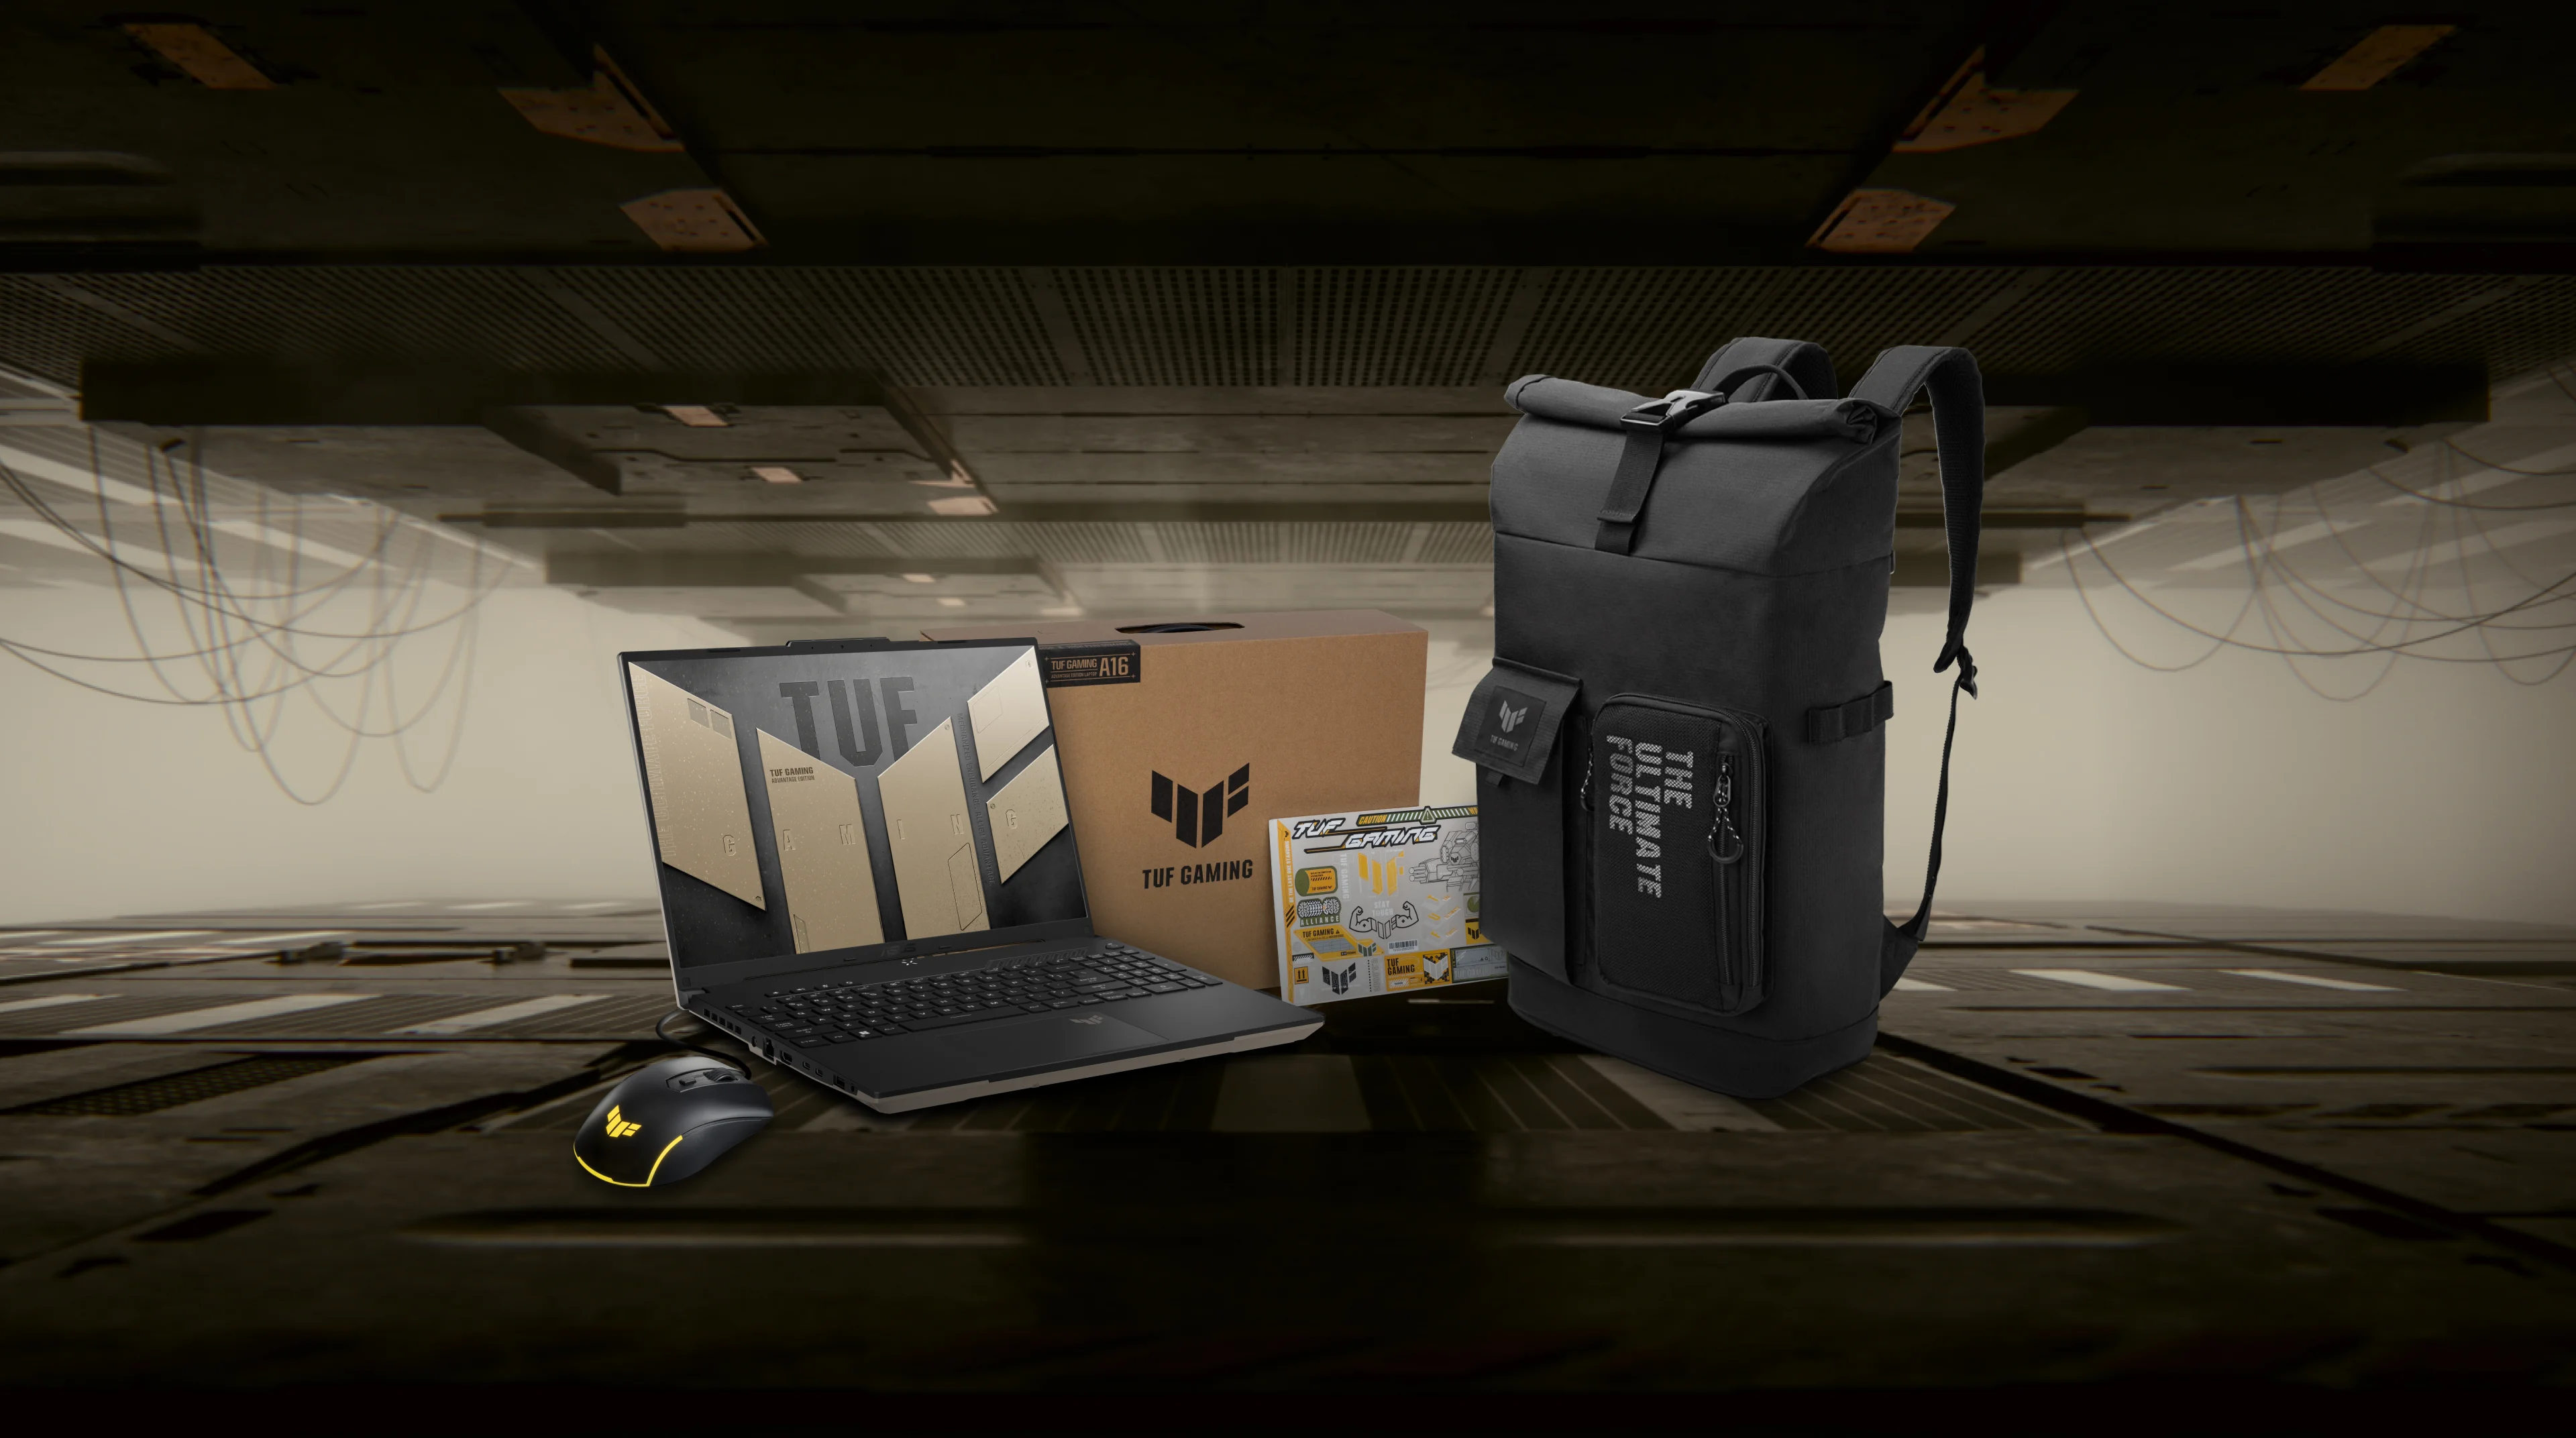 TUF Gaming A16 筆記型電腦以及滑鼠、背包和帶有 TUF 貼紙的包裝盒。